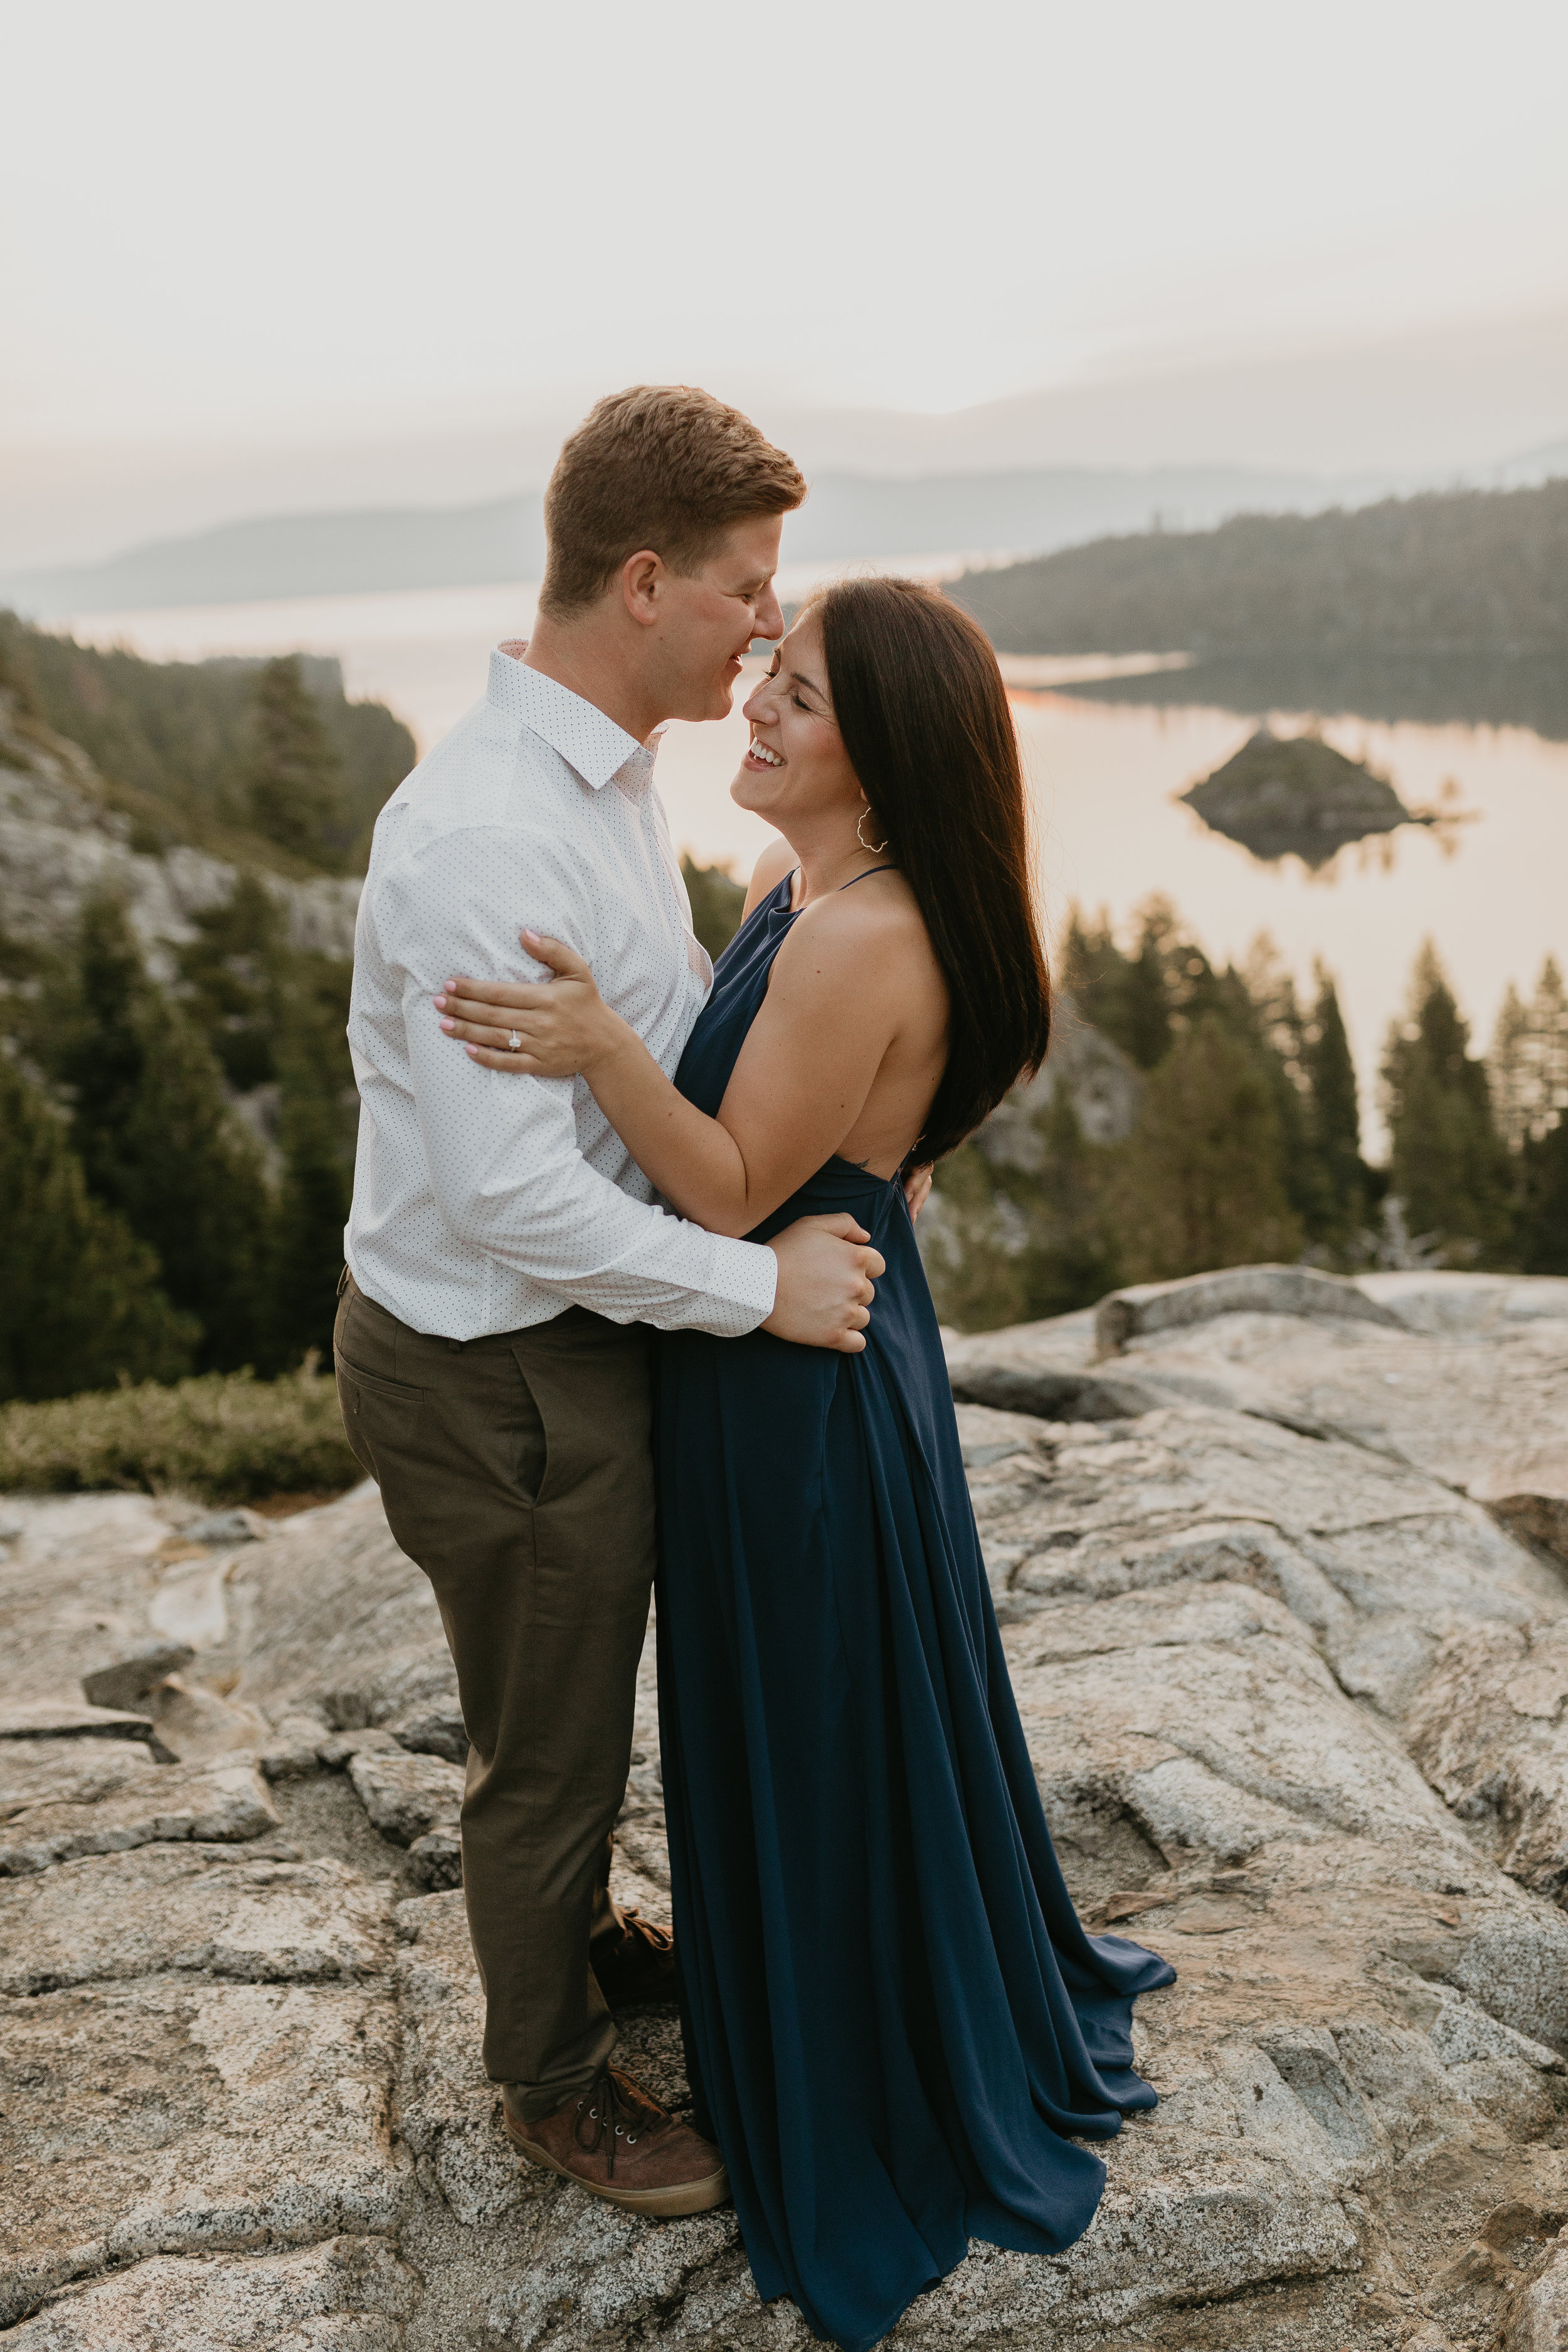 nicole-daacke-photography-lake-tahoe-sunrise-summer-adventure-engagement-photos-nevada-wedding-elopement-photographer-golden-emerald-bay-light-pine-trees-summer-vibe-fun-carefree-authentic-love-9.jpg